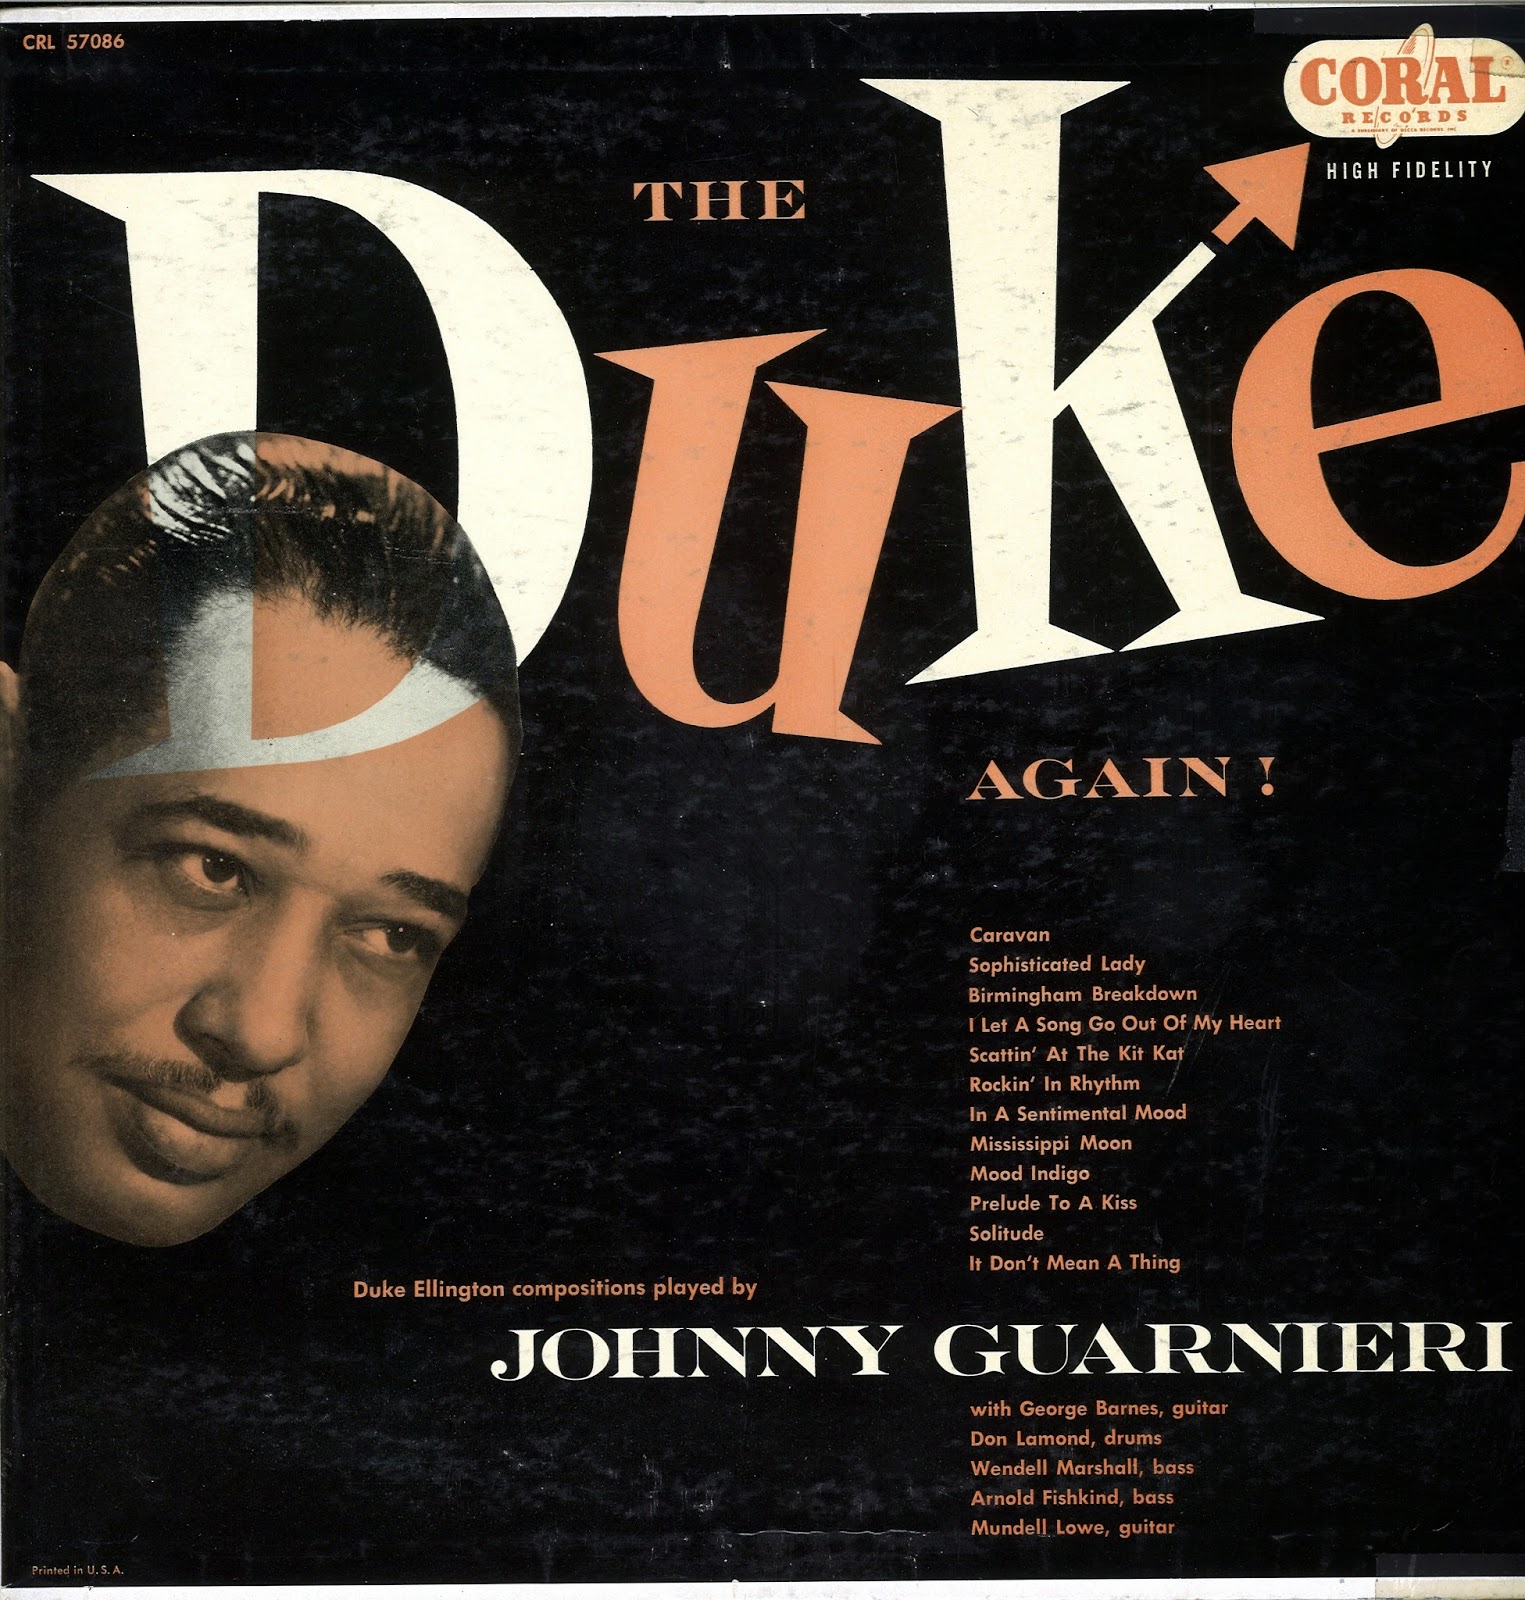 JOHNNY GUARNIERI - The Duke Again cover 